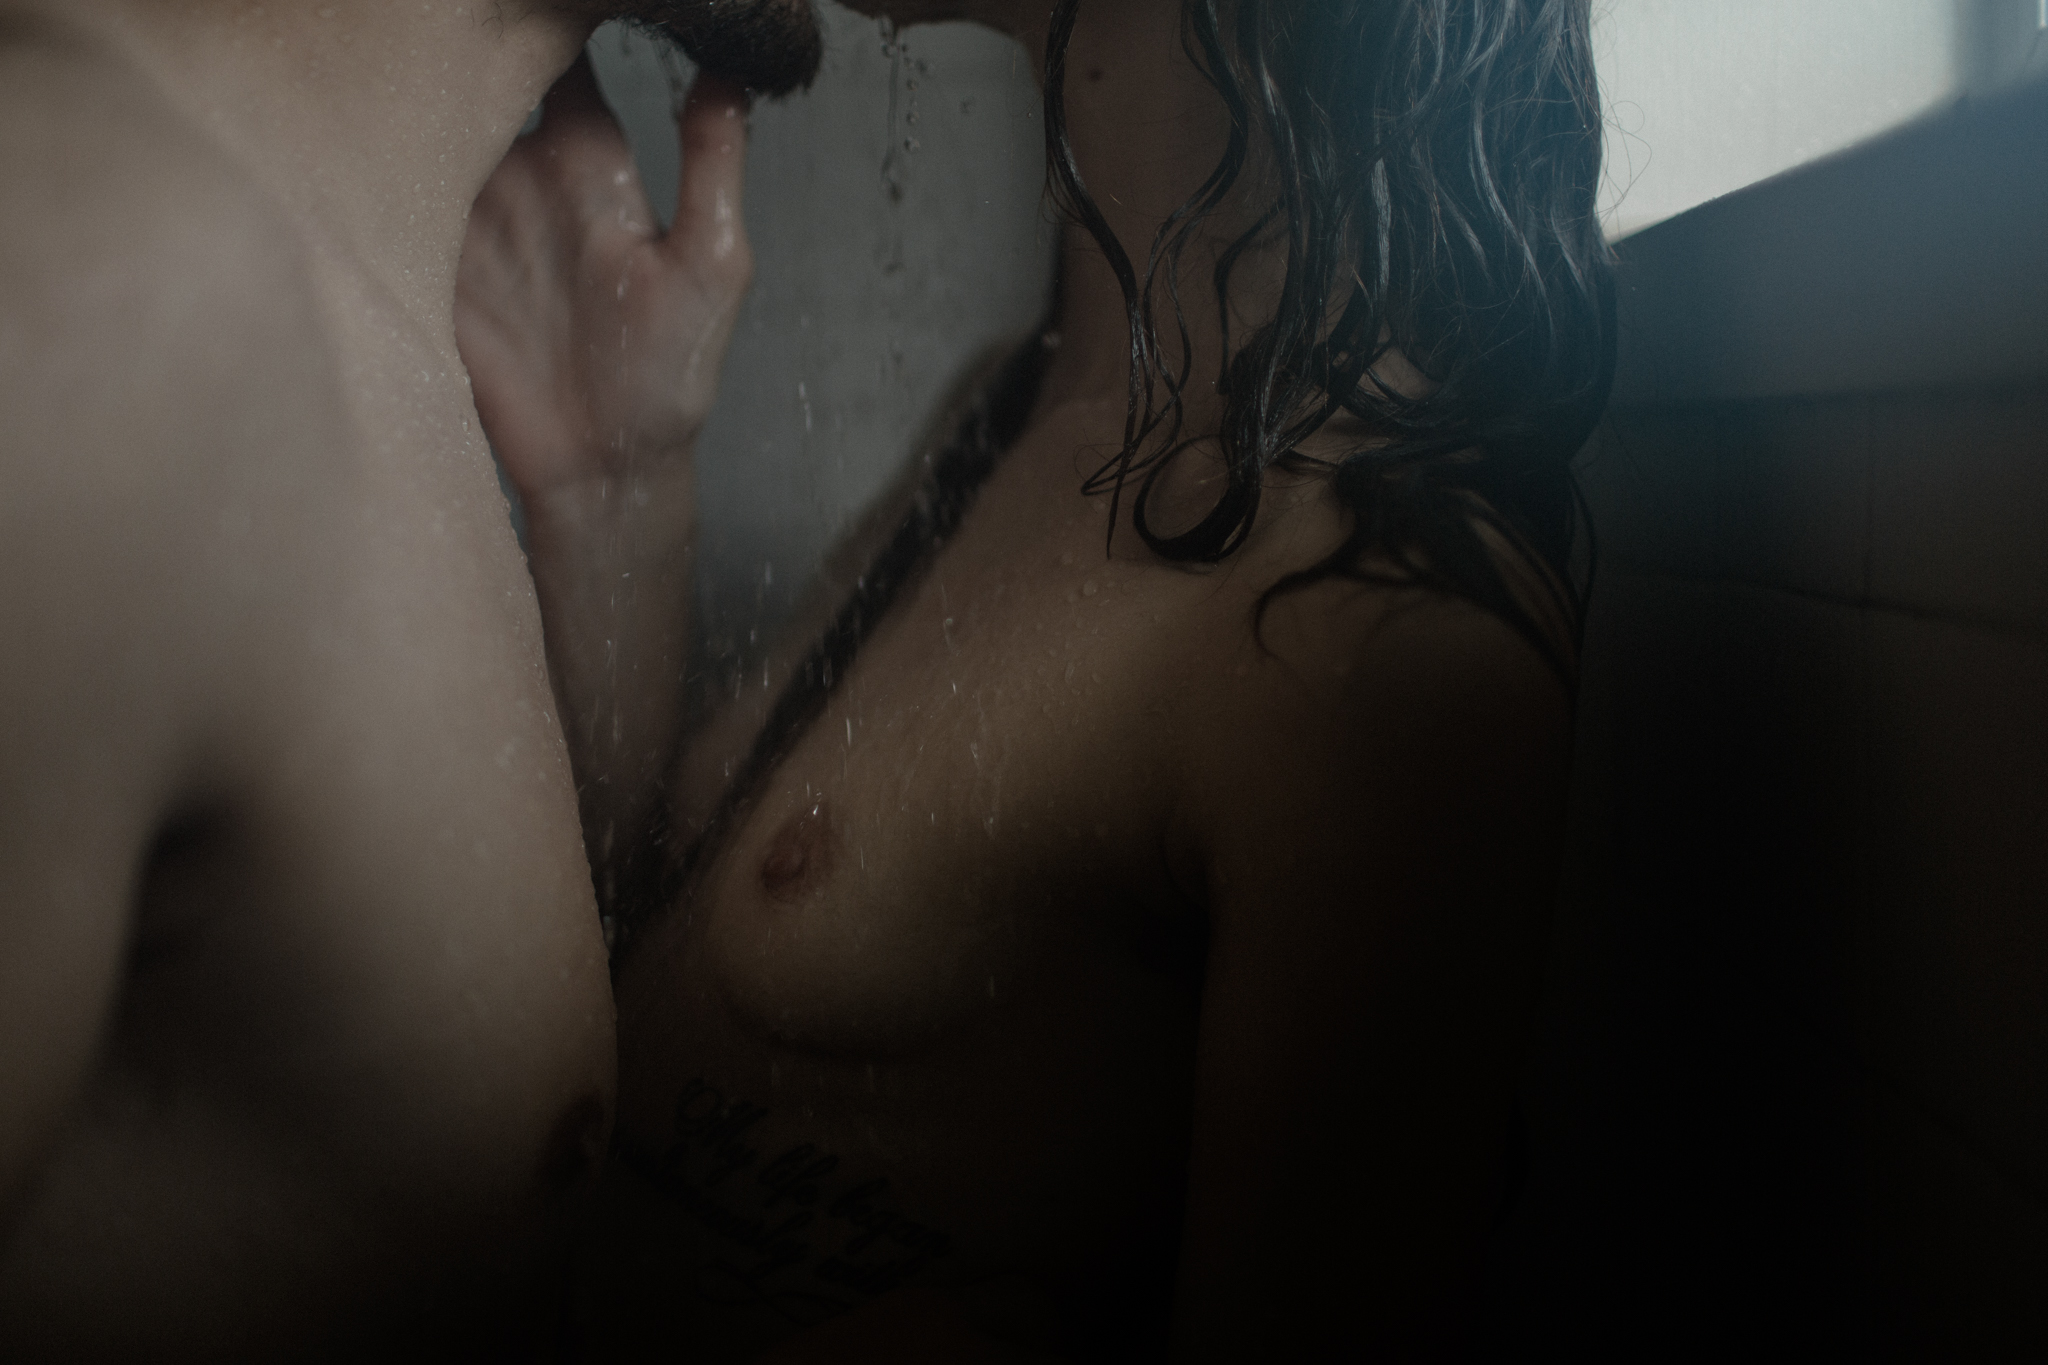 dark moody sensual boudoir photography intimate portraiture dayton columbus cincinnati cleveland ohio